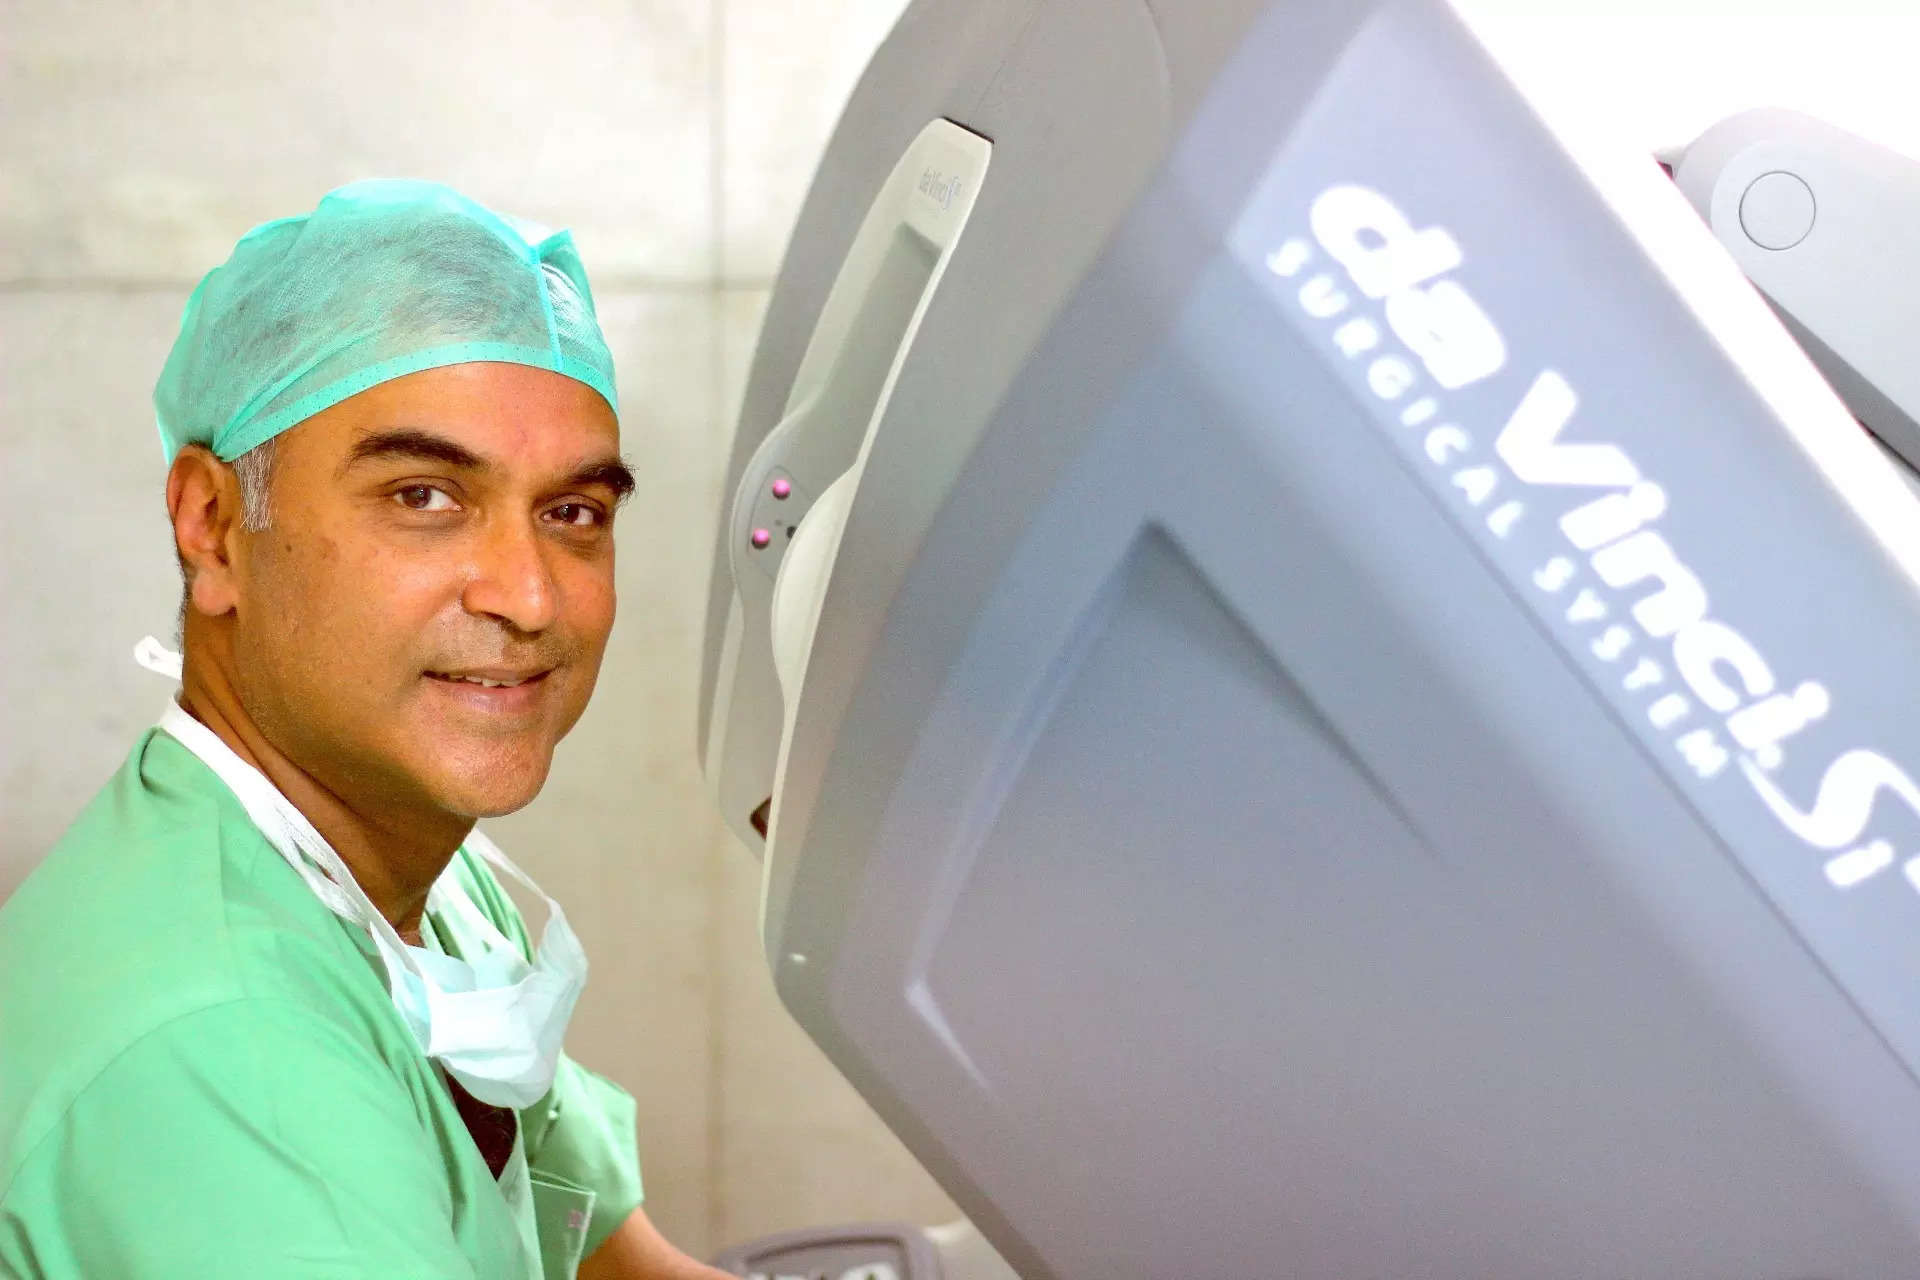 Vattikuti Foundation to host the best Robotic Surgery videos